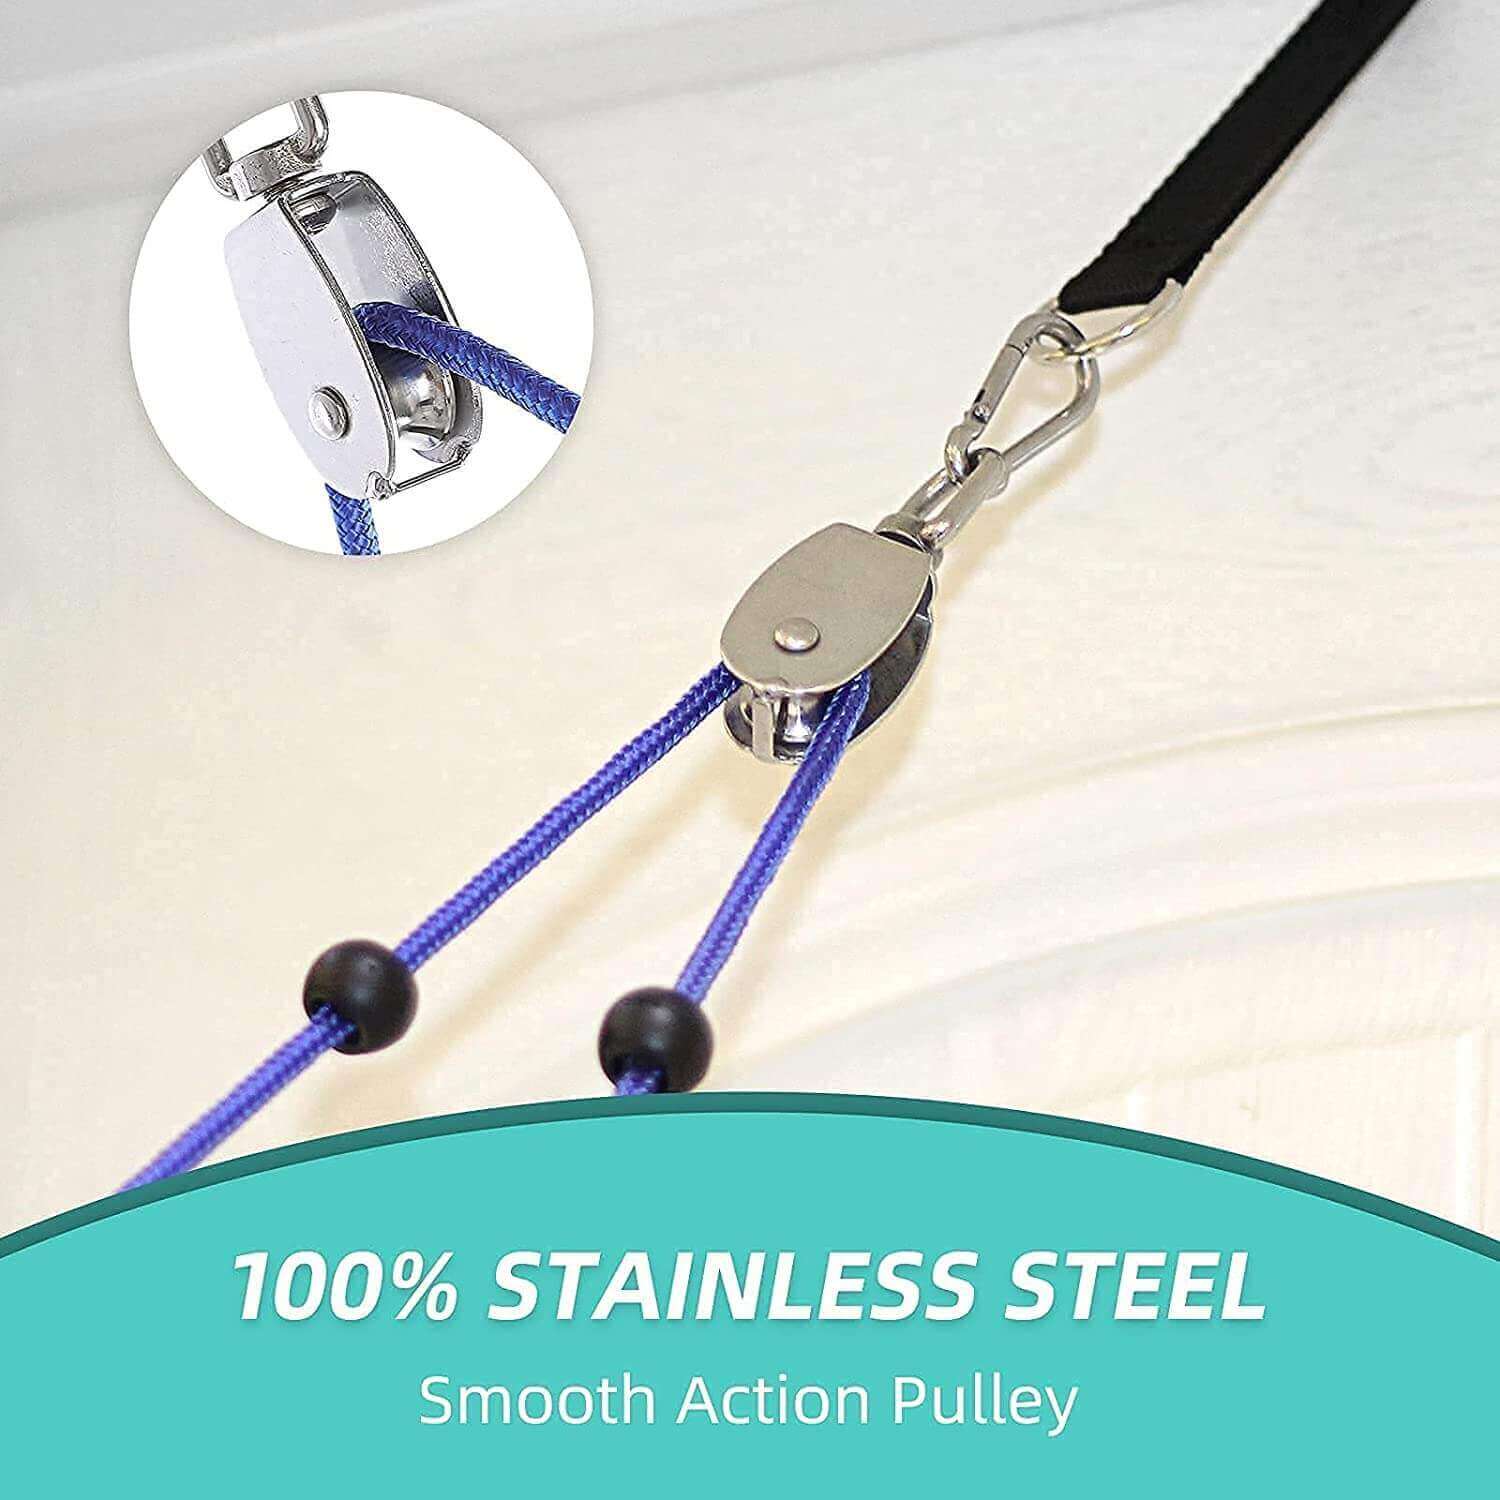 Fanwer Overdoor Shoulder Pulley Exerciser, for Frozen Shoulder Rehab, the pulley on the ground